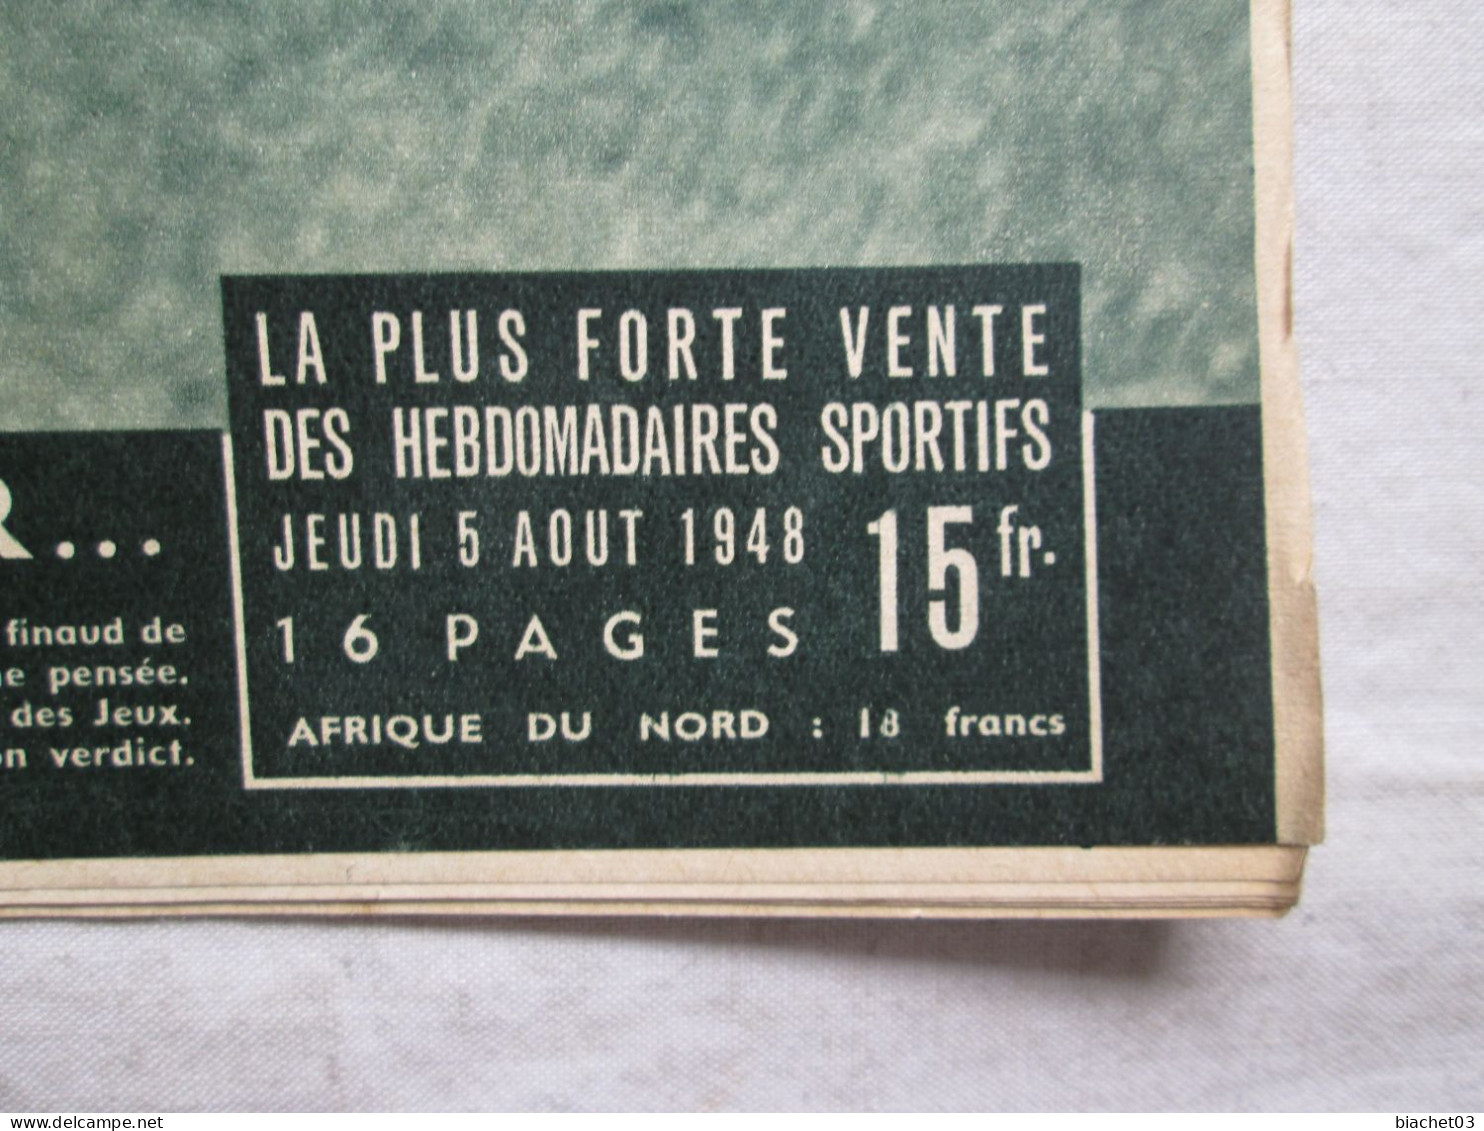 miroir sprint lot de 48 n° de 1948